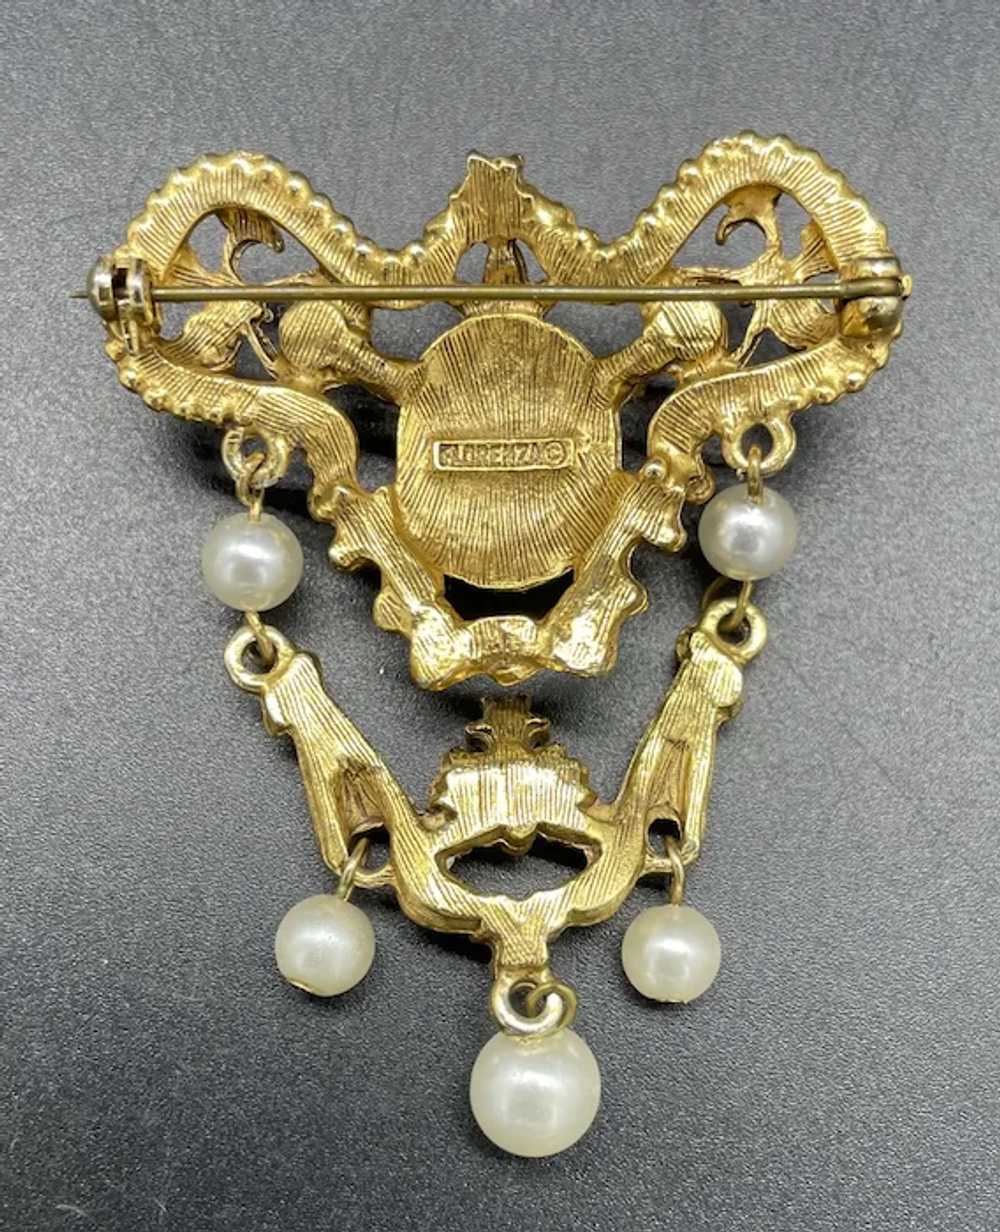 Florenza Victorian Revival dangle brooch - image 5